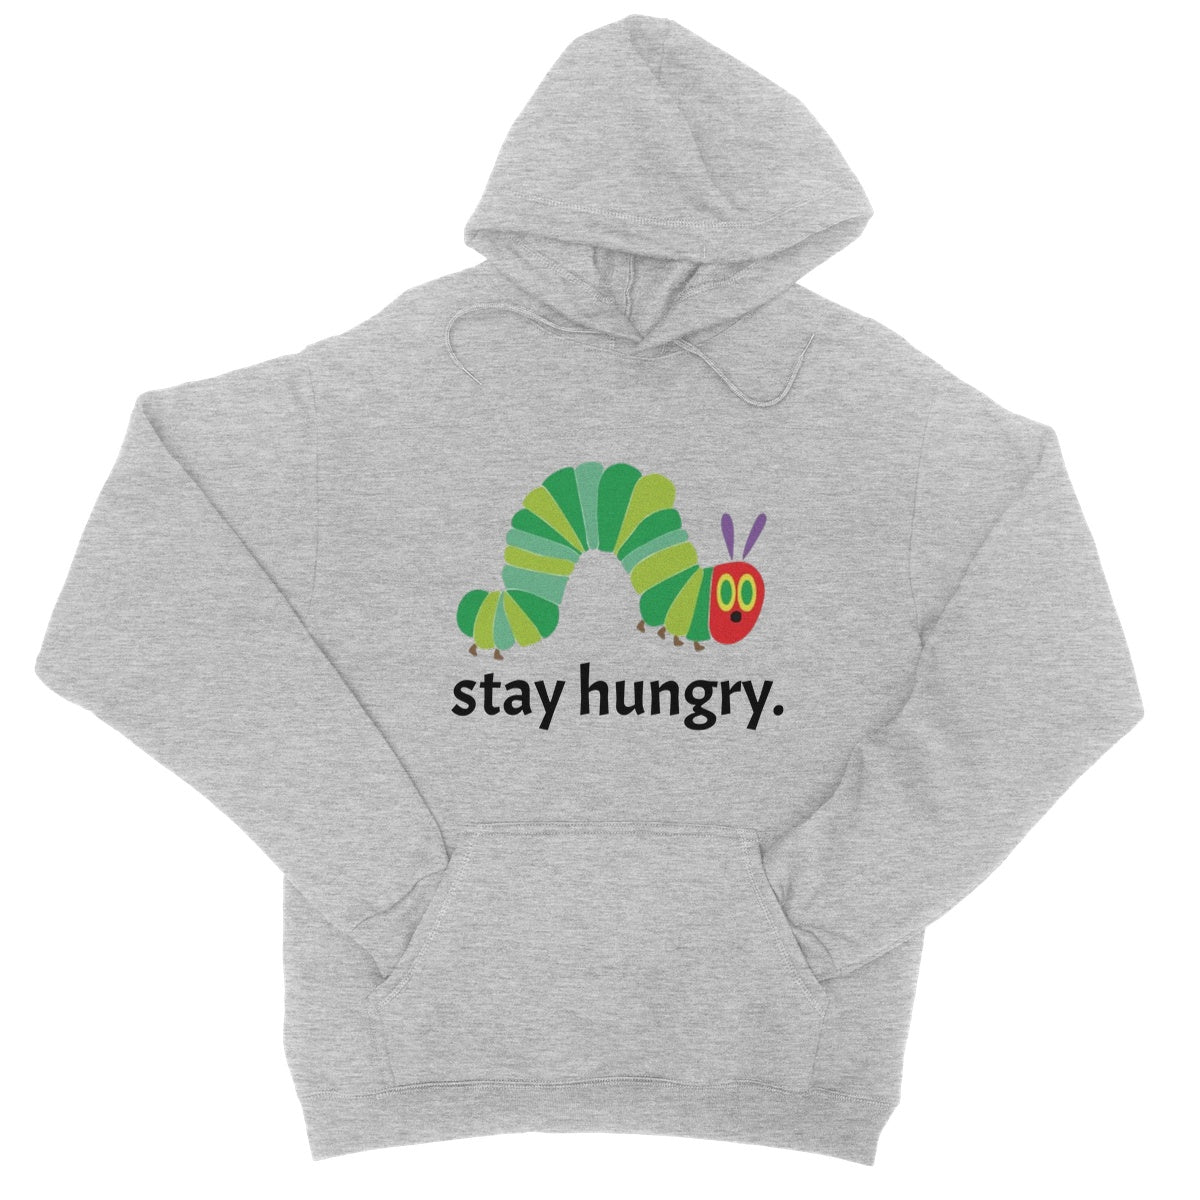 stay hungry hoodie grey